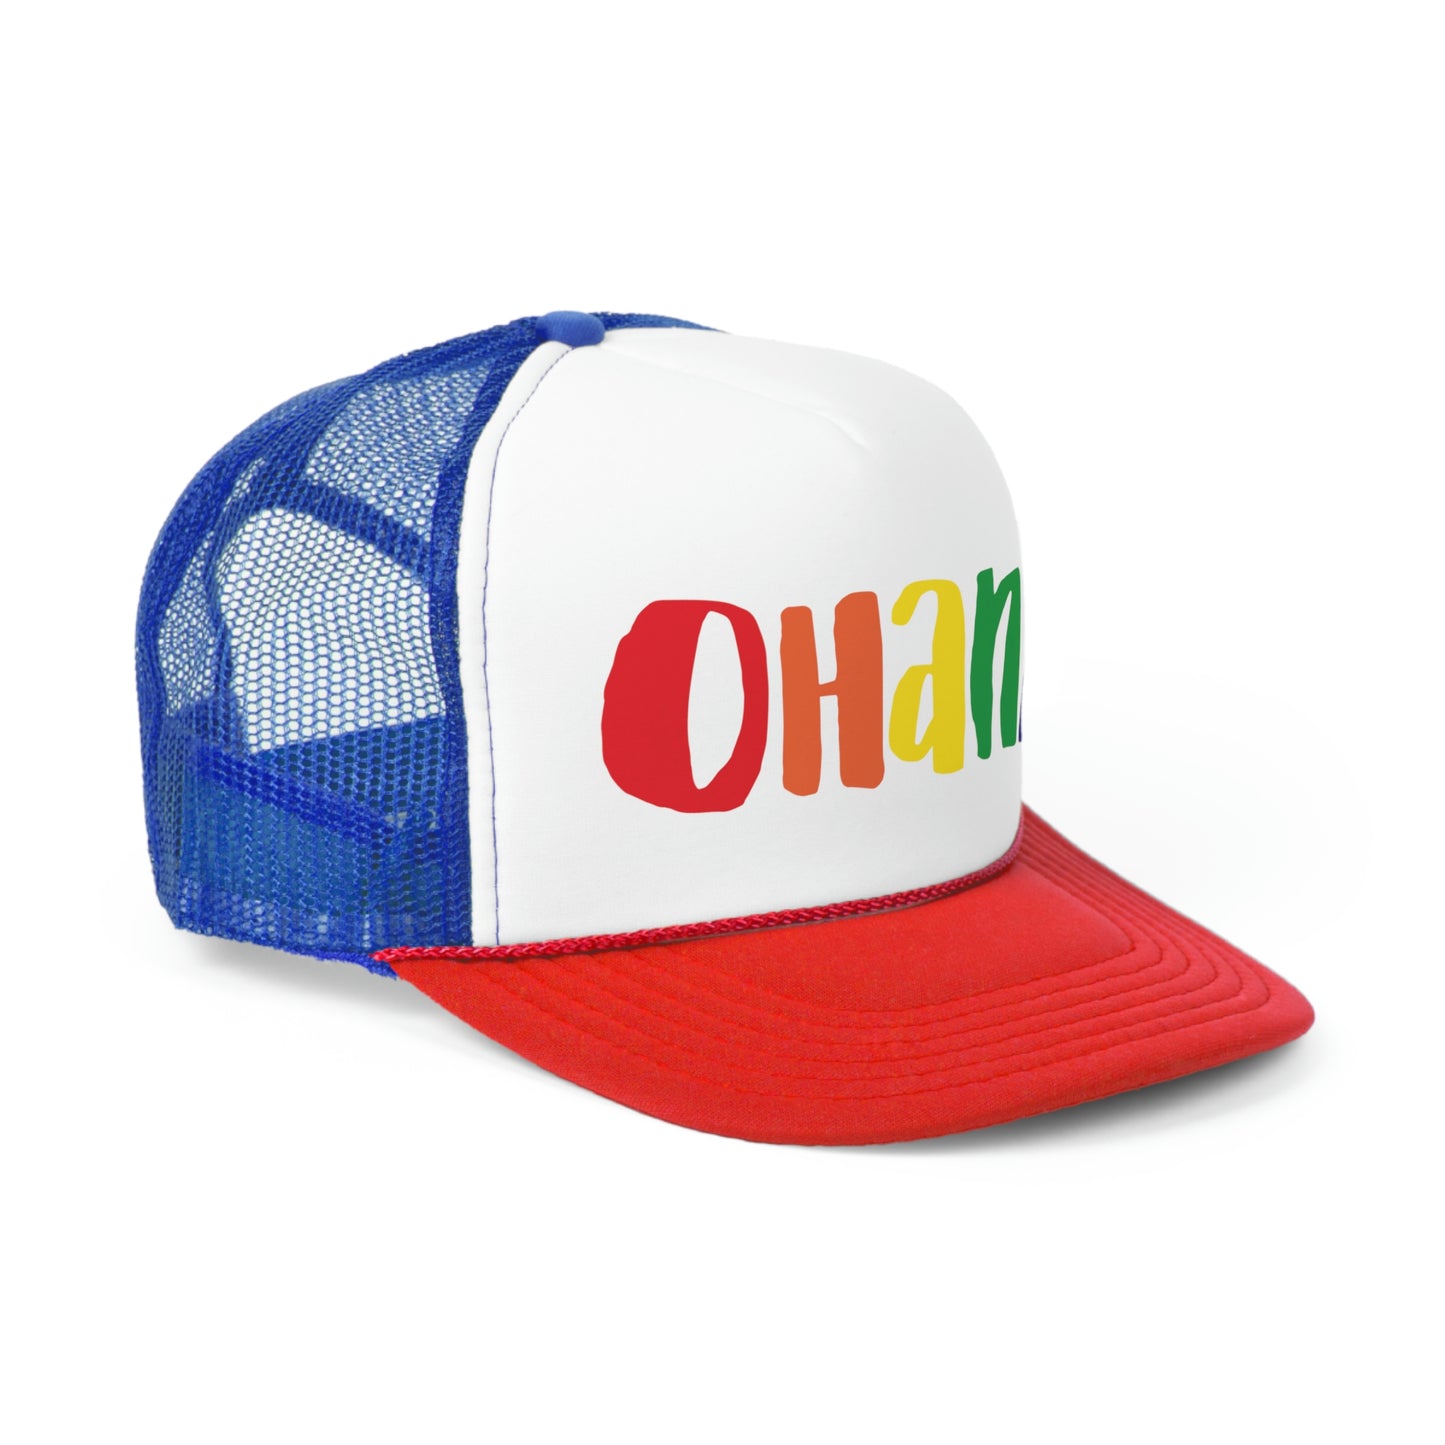 Ohana Hats